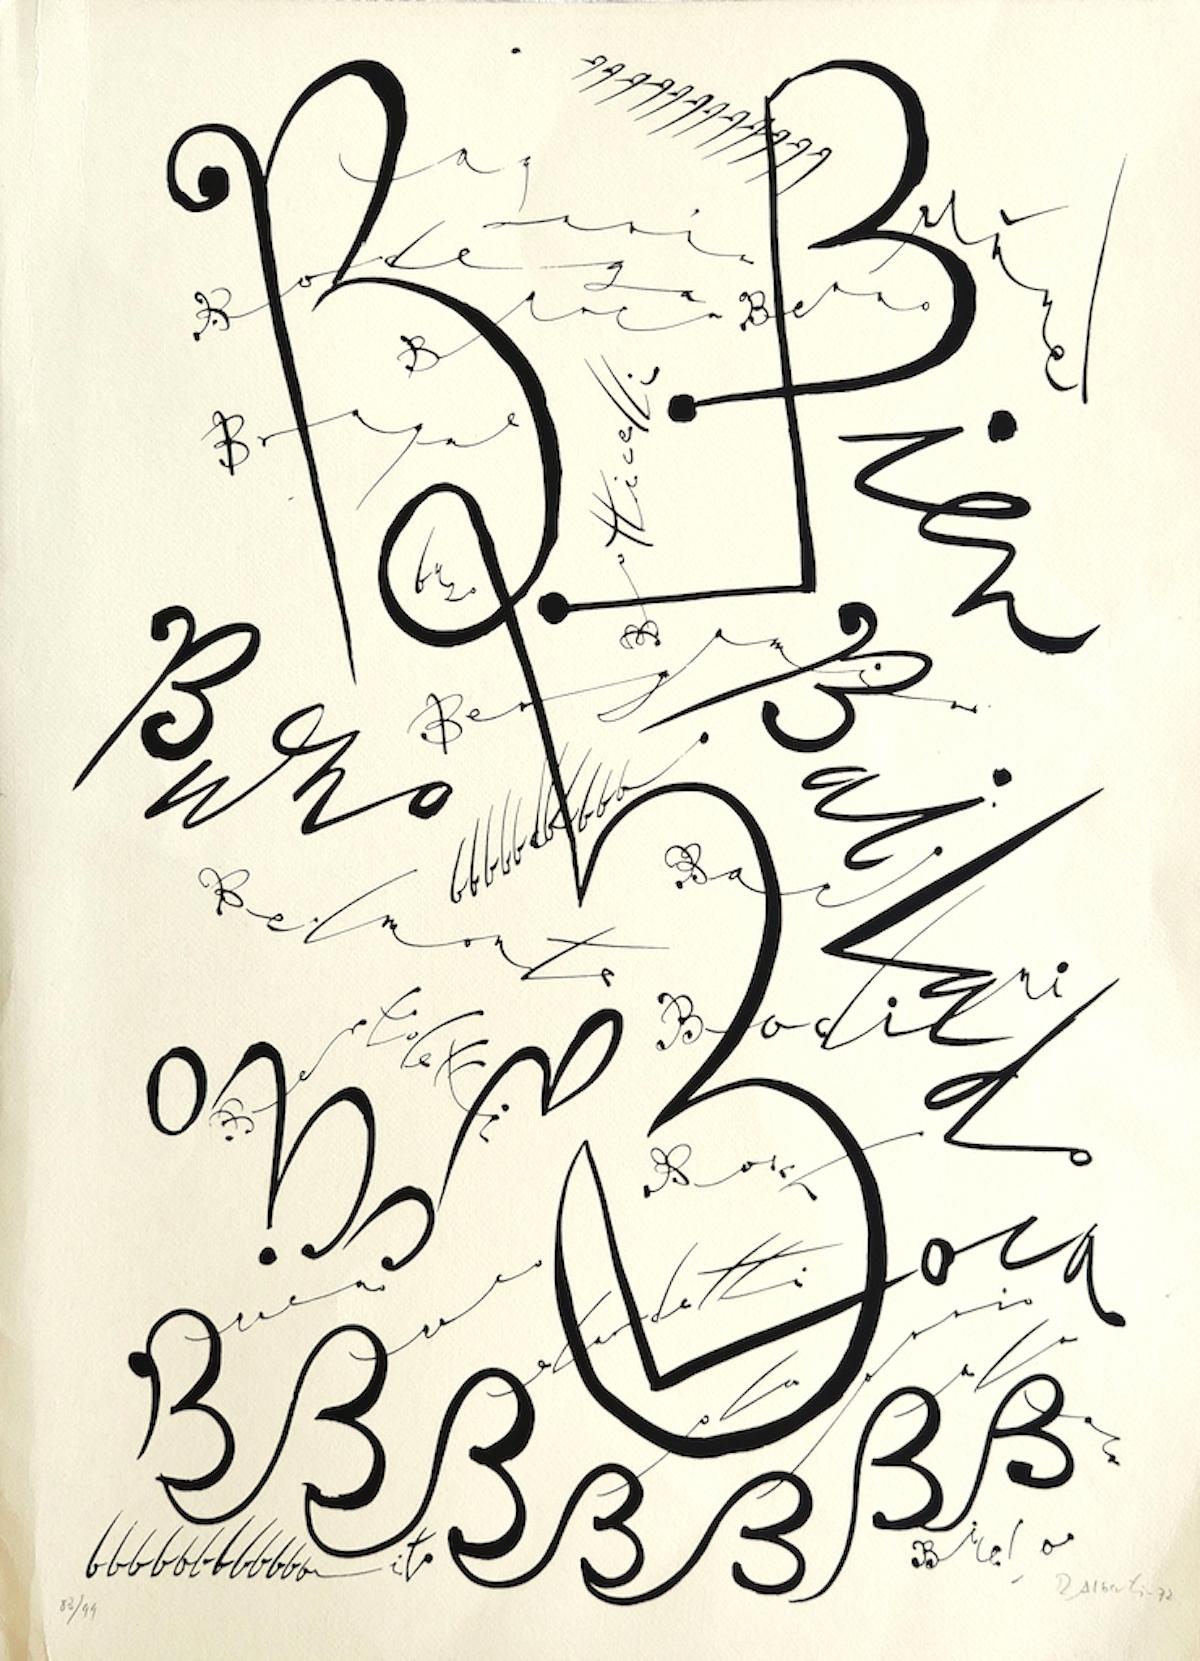 Rafael Alberti Abstract Print - Letter B - Original Lithograph by Raphael Alberti - 1972